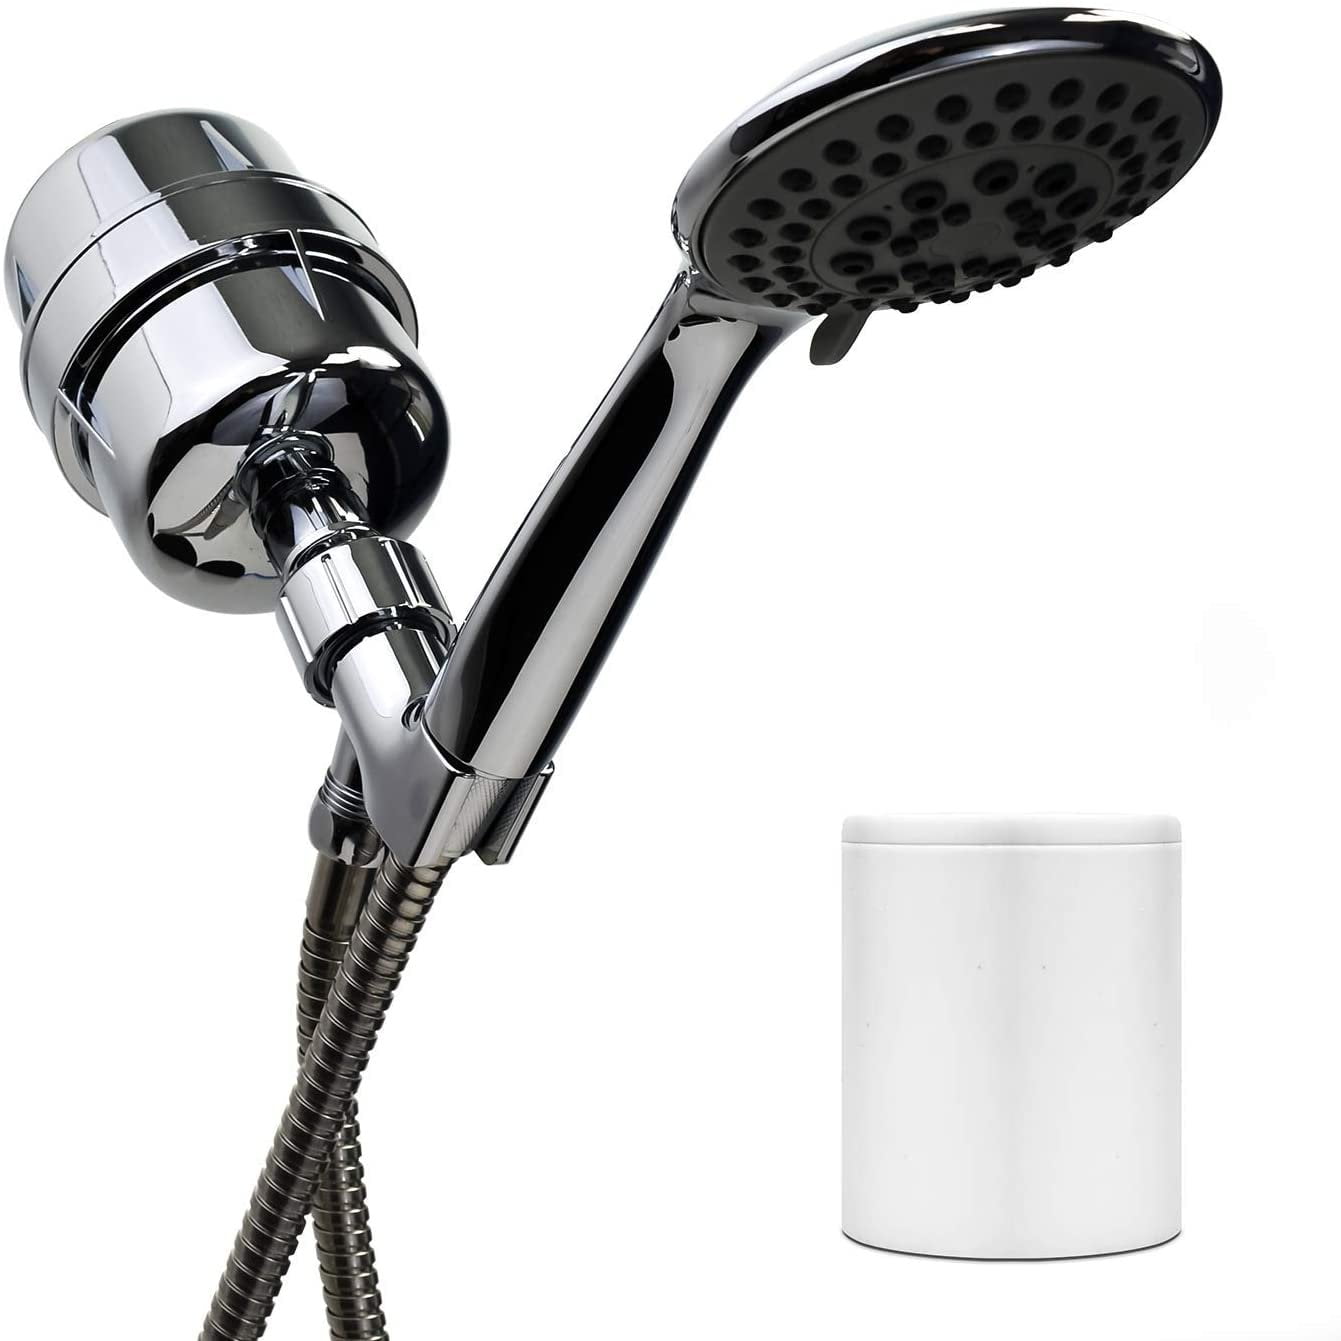 Filtered Handheld Shower Head with Brush Removes Fluoride & Healthy Splash 